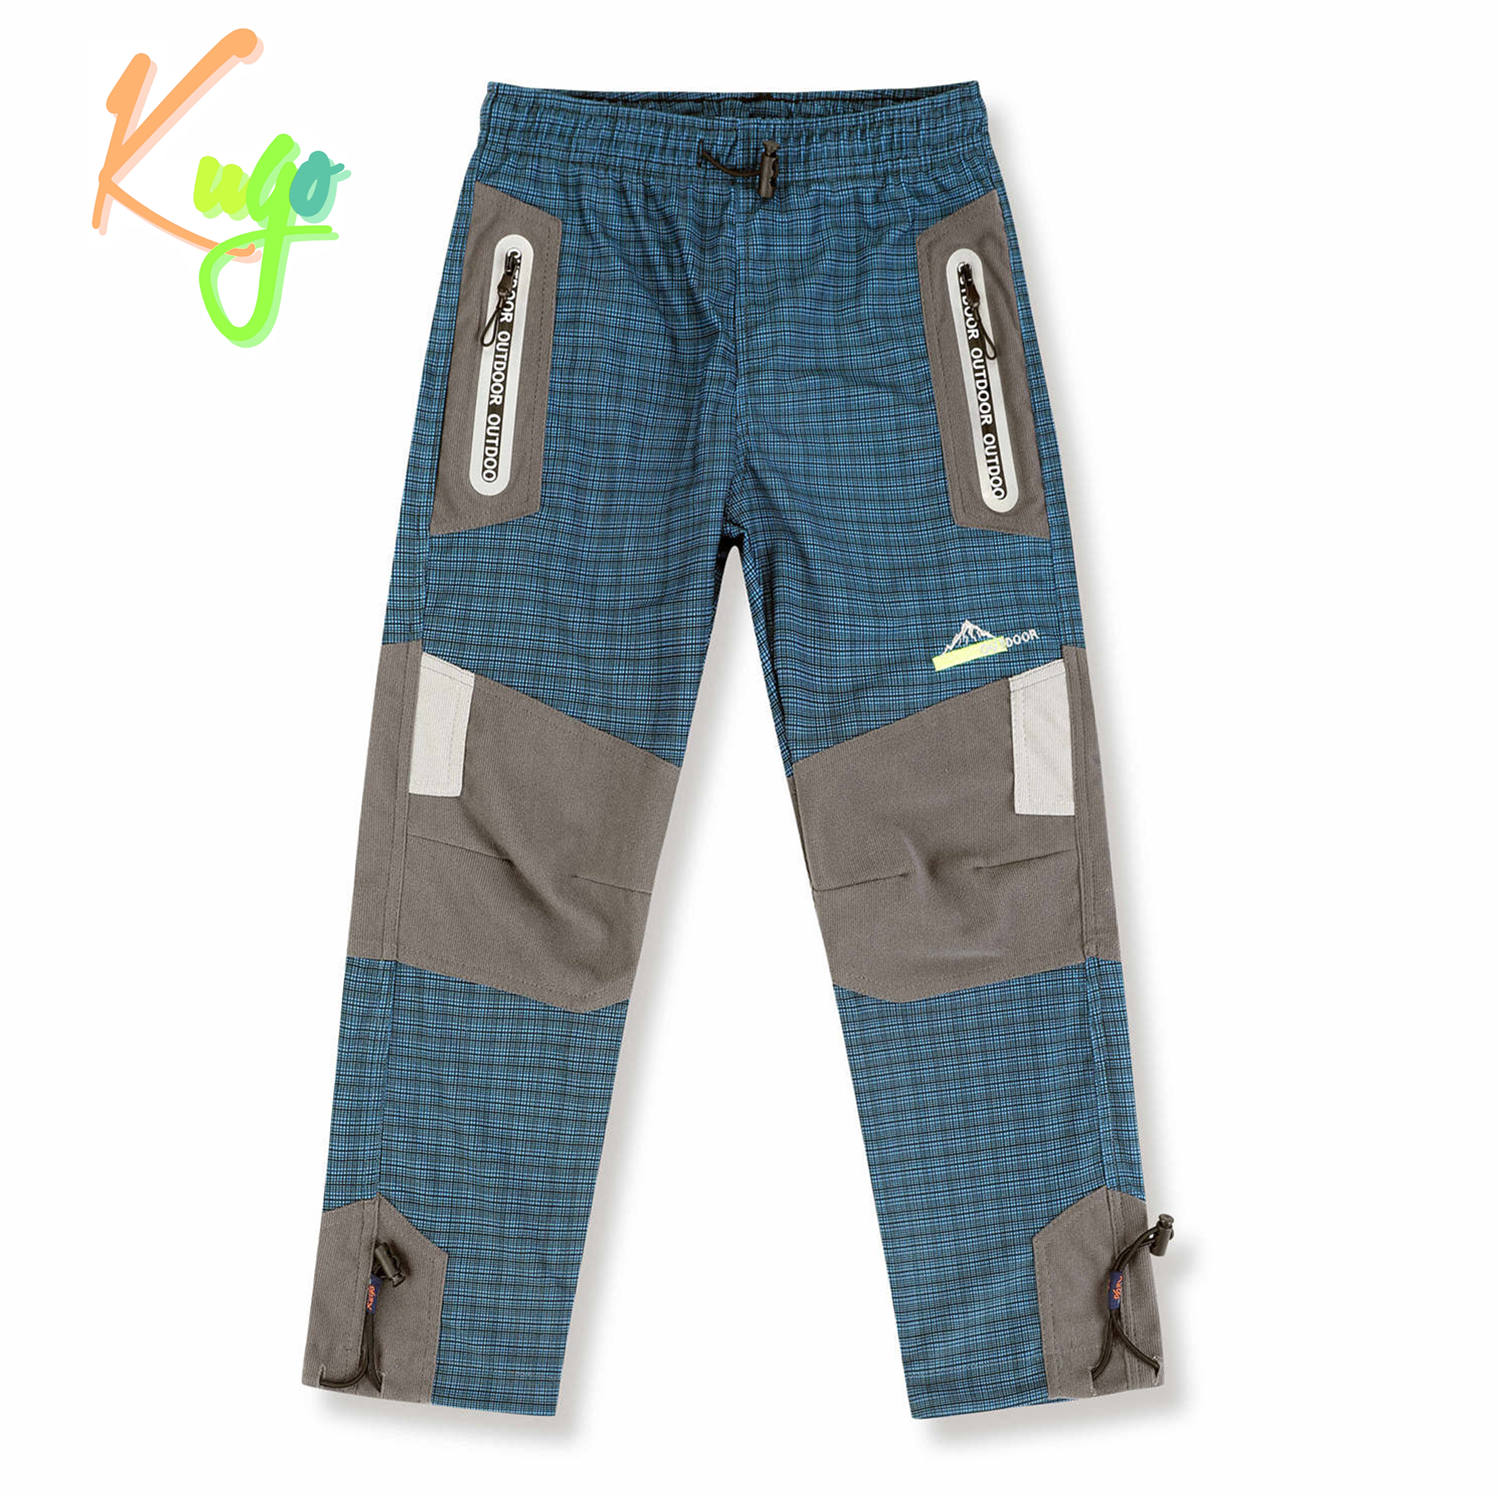 Chlapecké outdoorové kalhoty - KUGO G9781, petrol Barva: Petrol, Velikost: 116